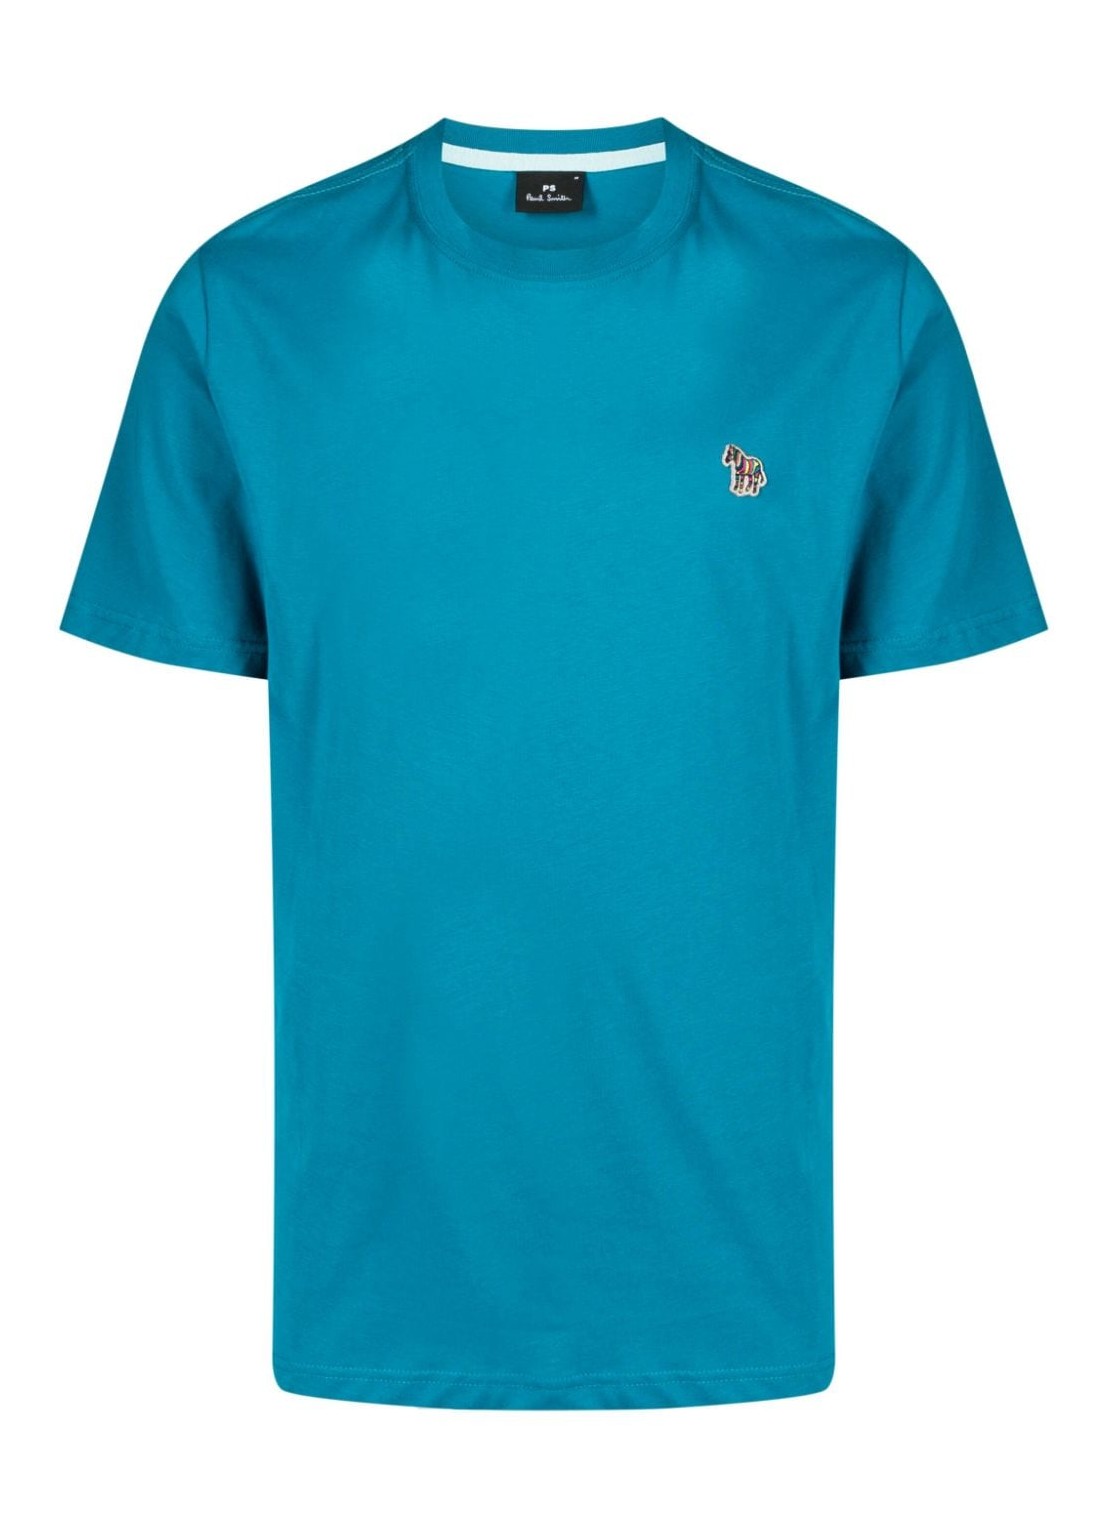 Camiseta ps t-shirt man mens ss reg fit tshirt zebra badge m2r011rzm20064 44j talla Azul
 